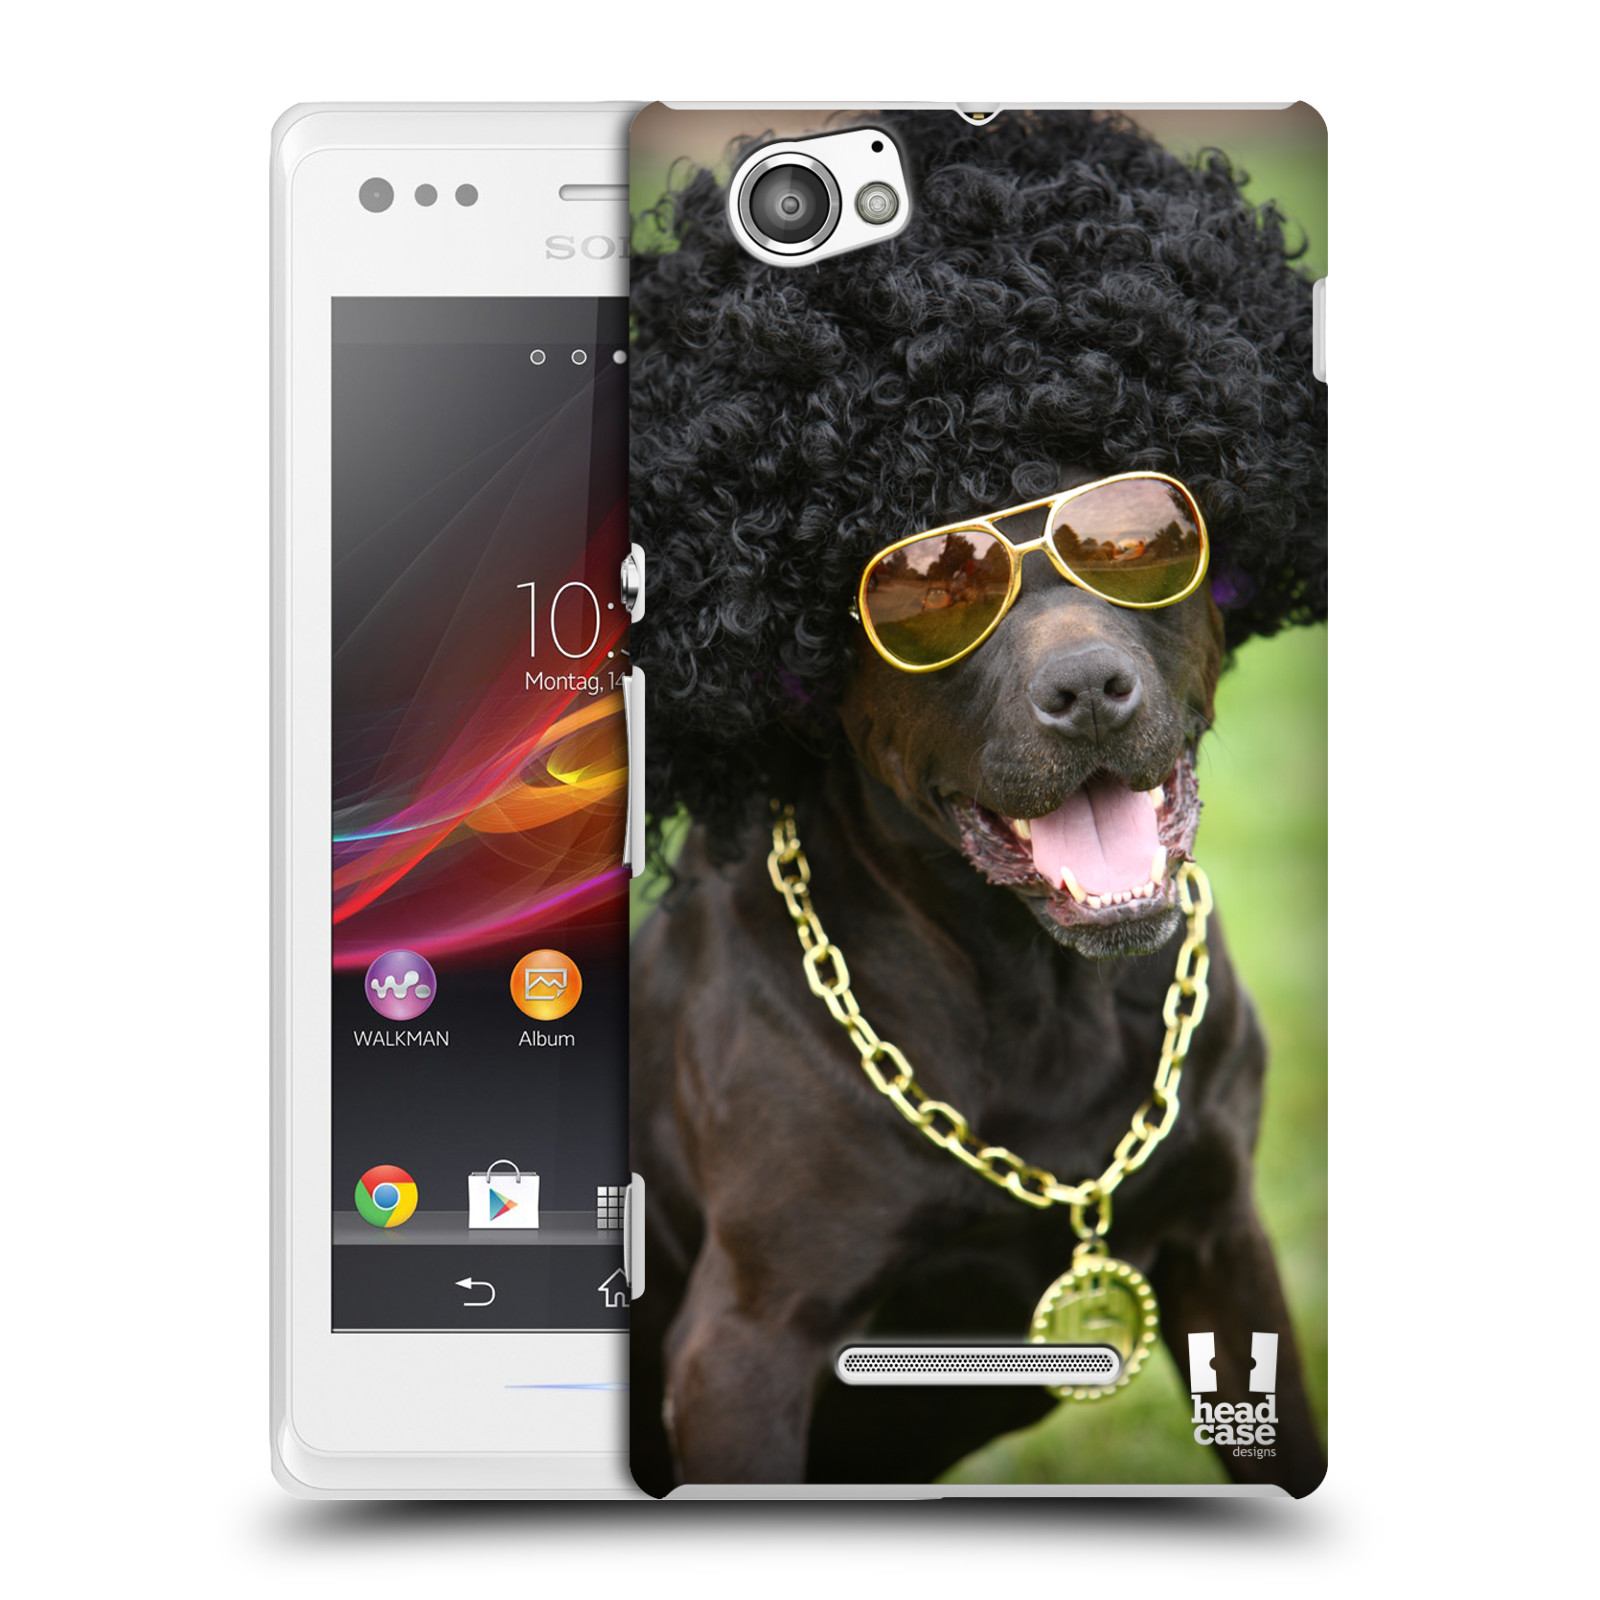 HEAD CASE plastový obal na mobil Sony Xperia M vzor Legrační zvířátka pejsek boháč